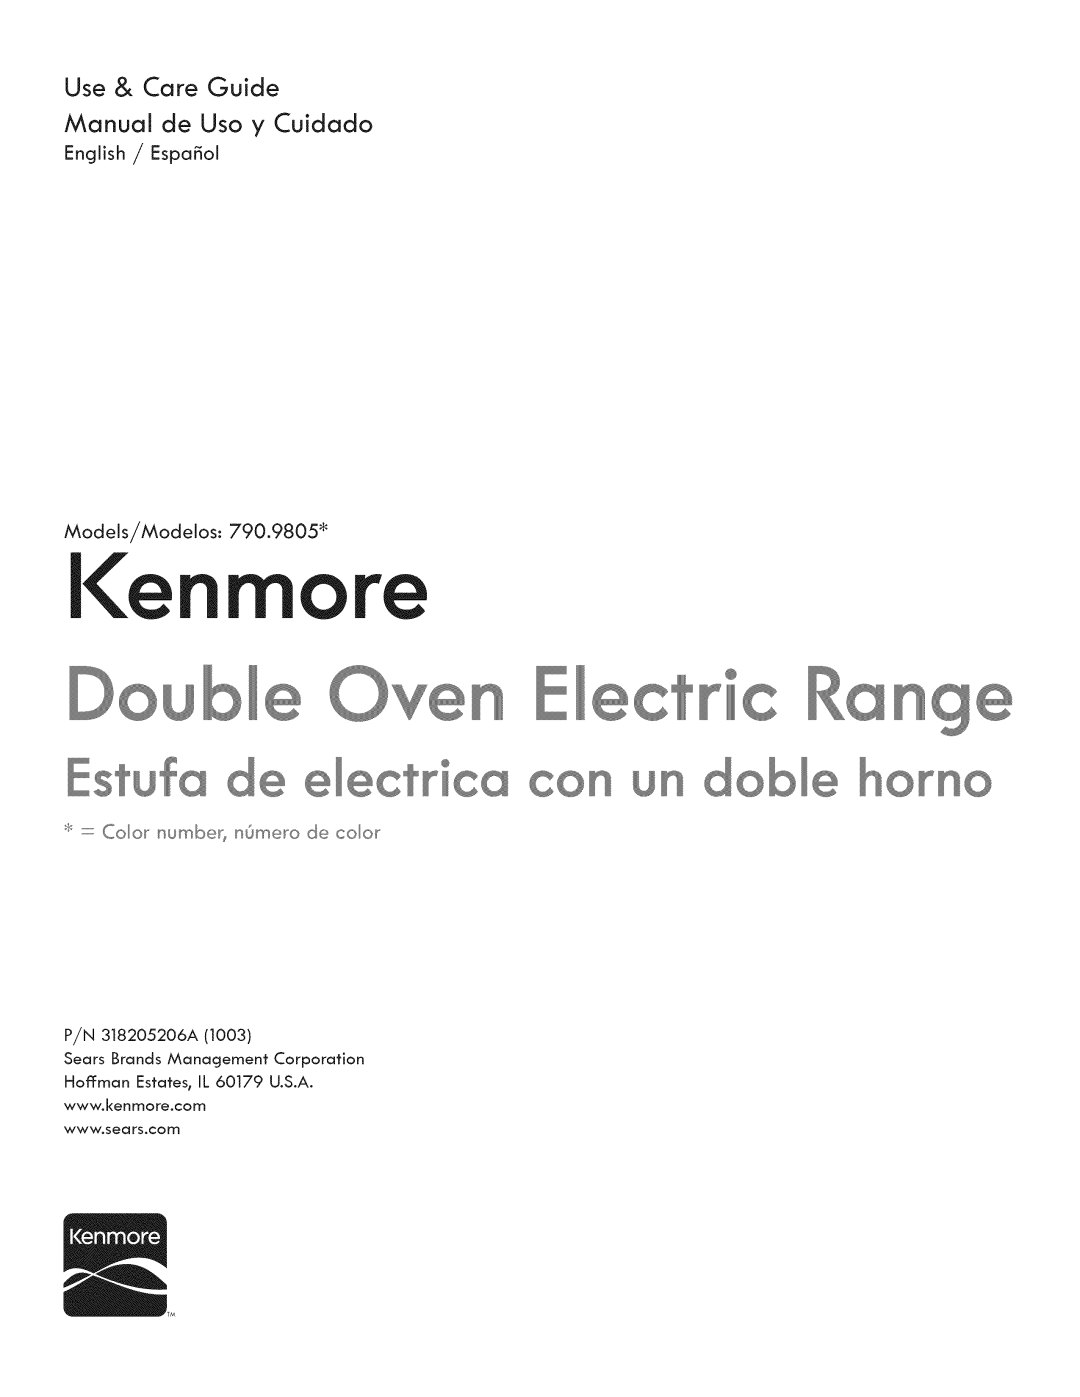 Kenmore 790.9805 manual Use & Care Guide, _orno 